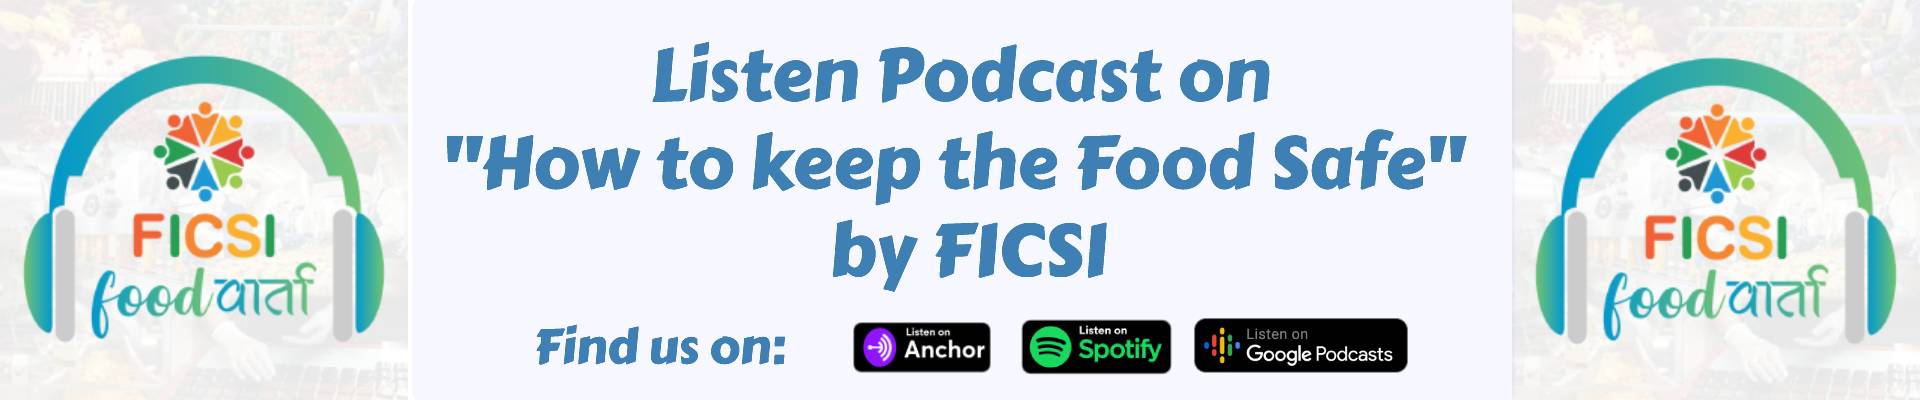 FICSI Food Vaarta Podcast